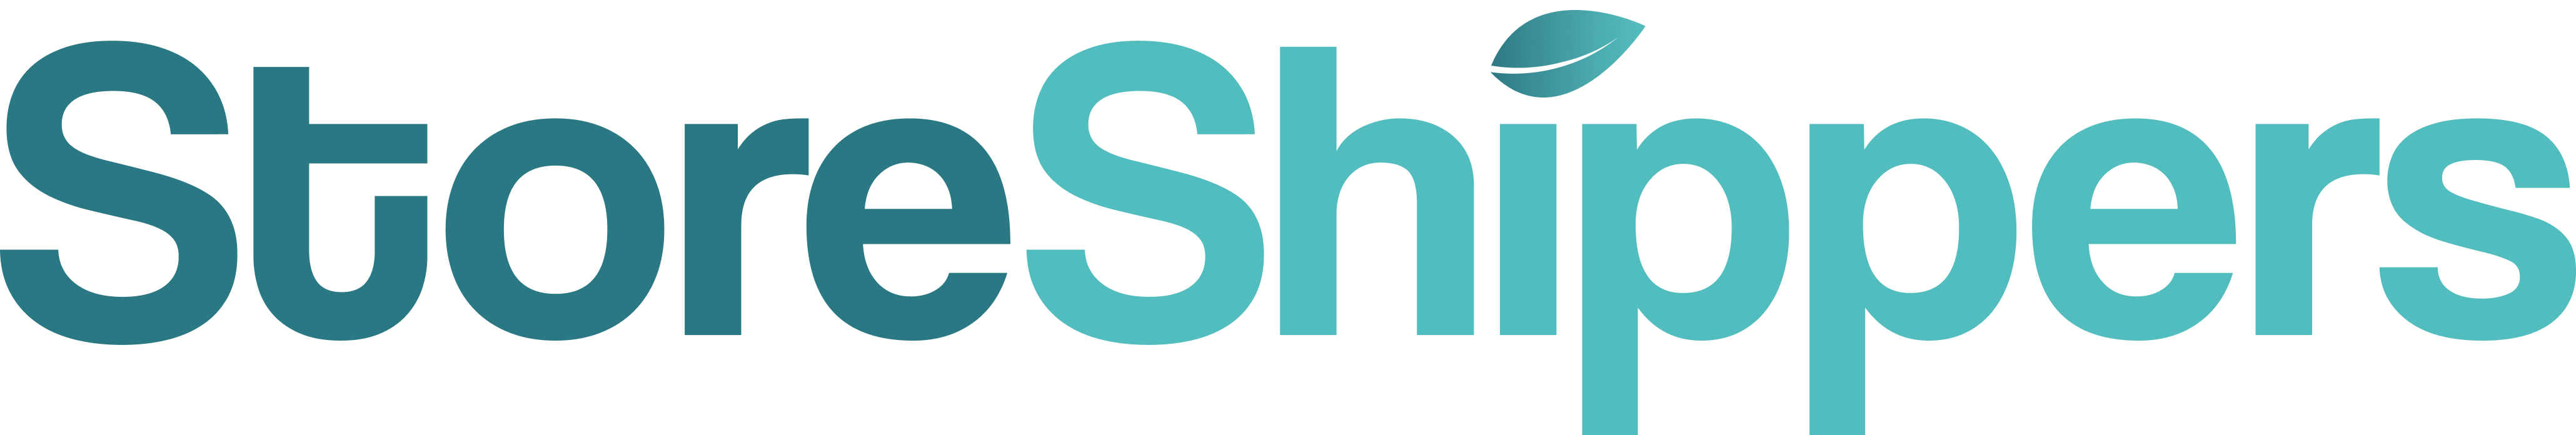 Storeshippers logo